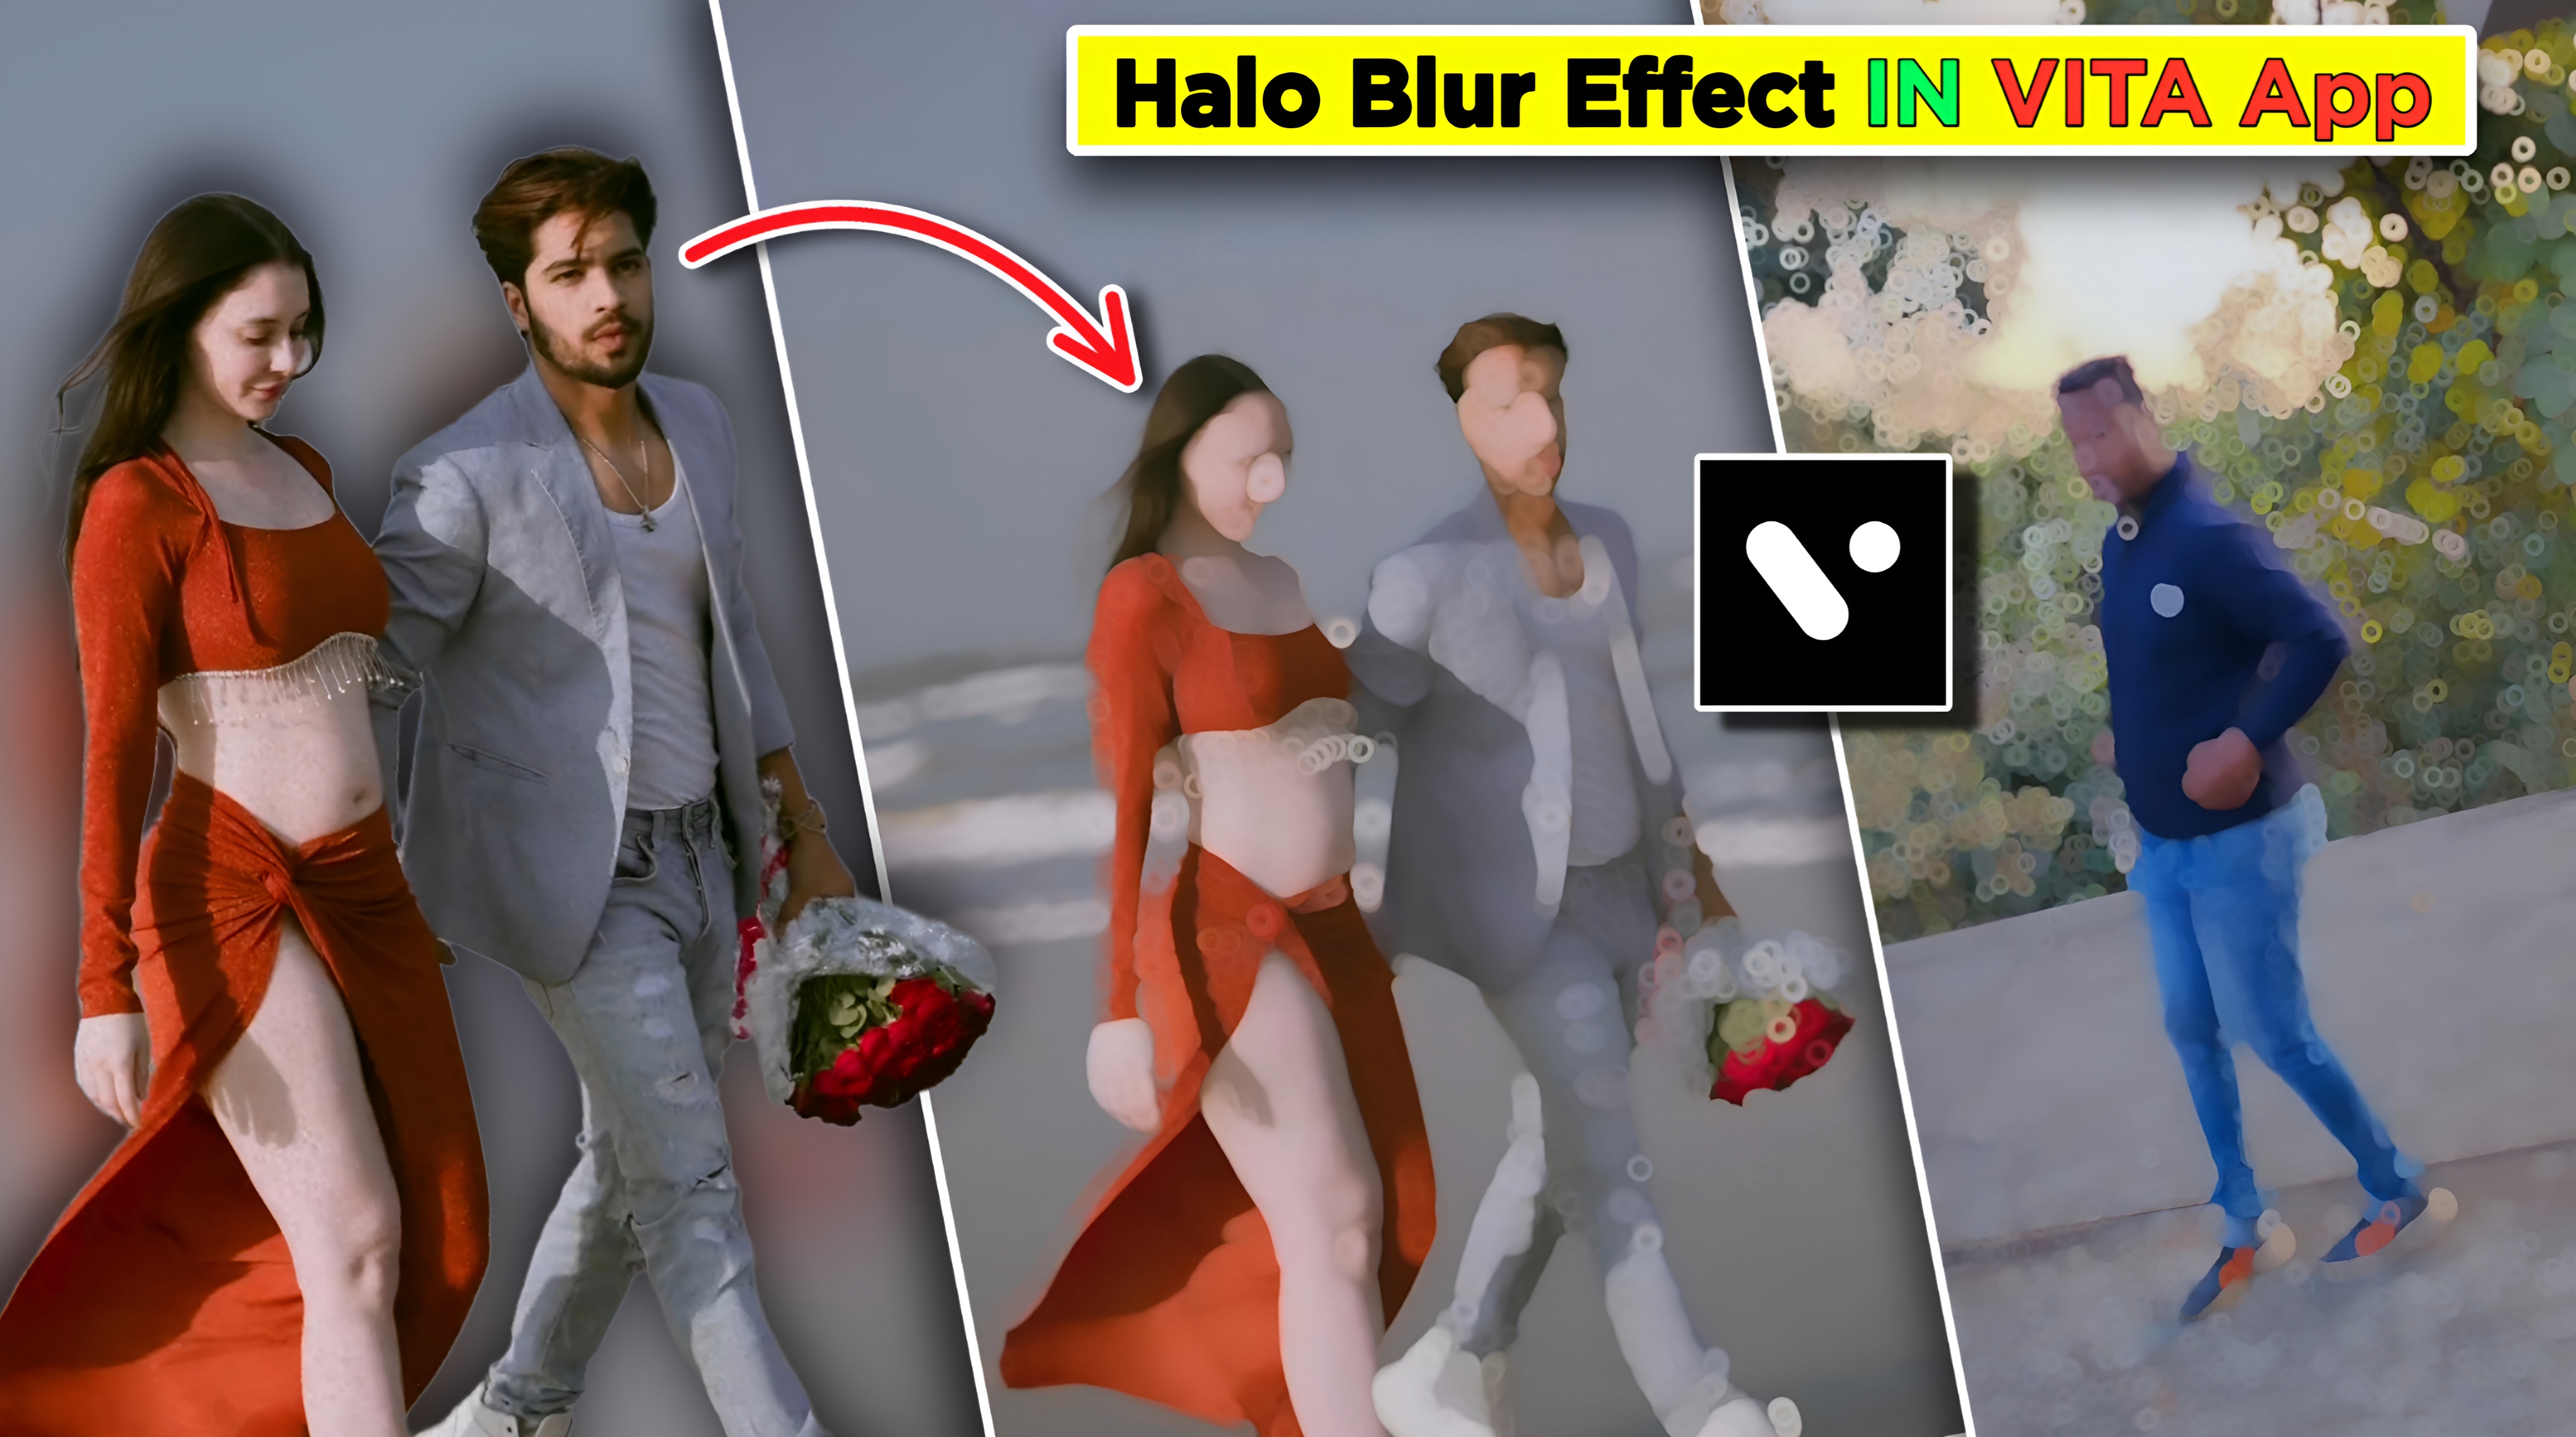 Why This Kolaveri Di || How To Make Lens Blur Video || Halo Blur Effect Video || Vita Video Editing